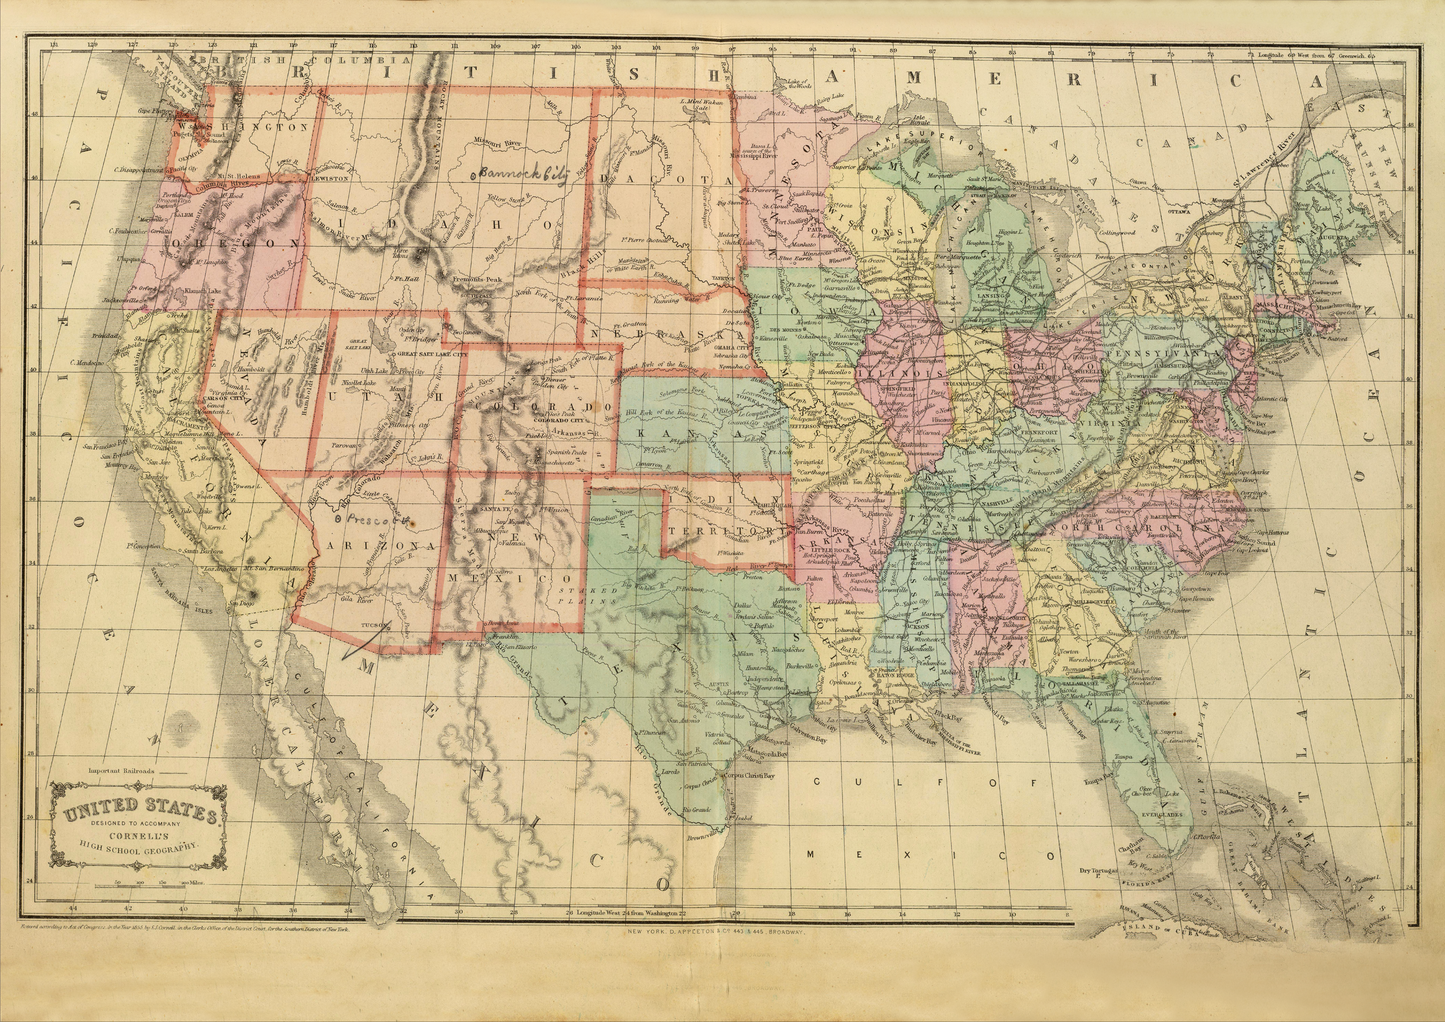 United States Cornell's Historic Map